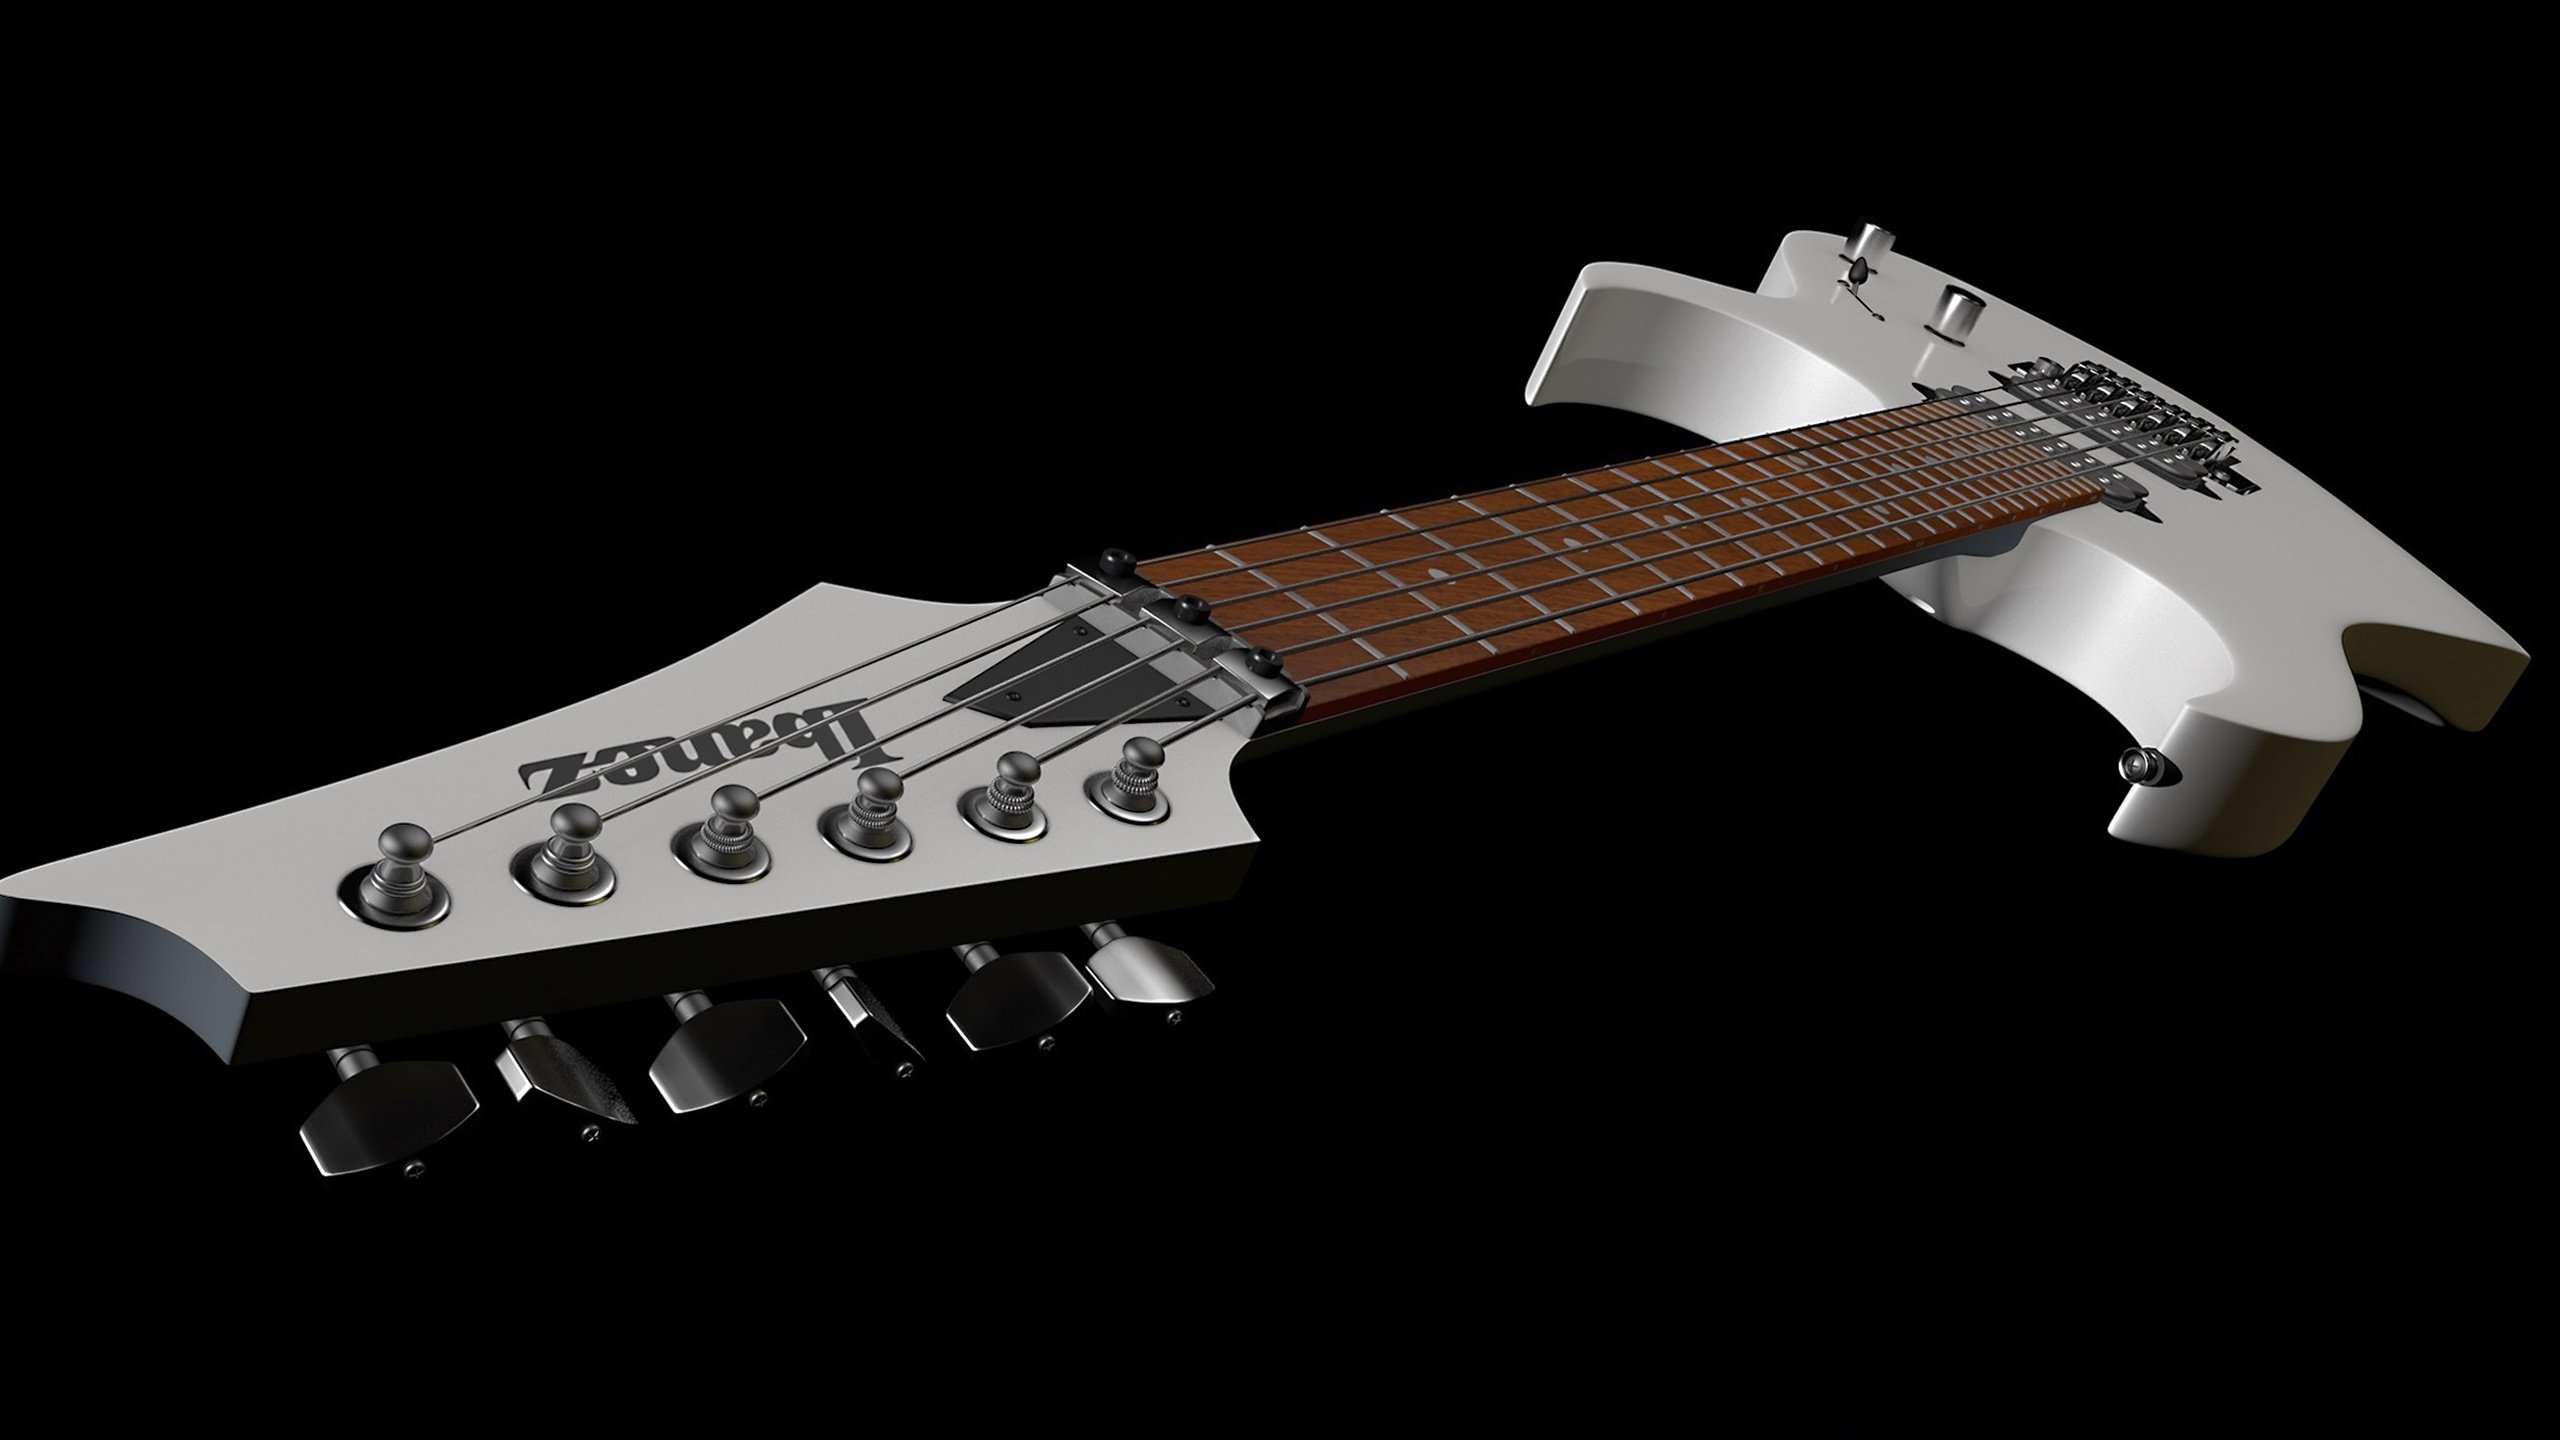 2560x1440 wallpaper guitar